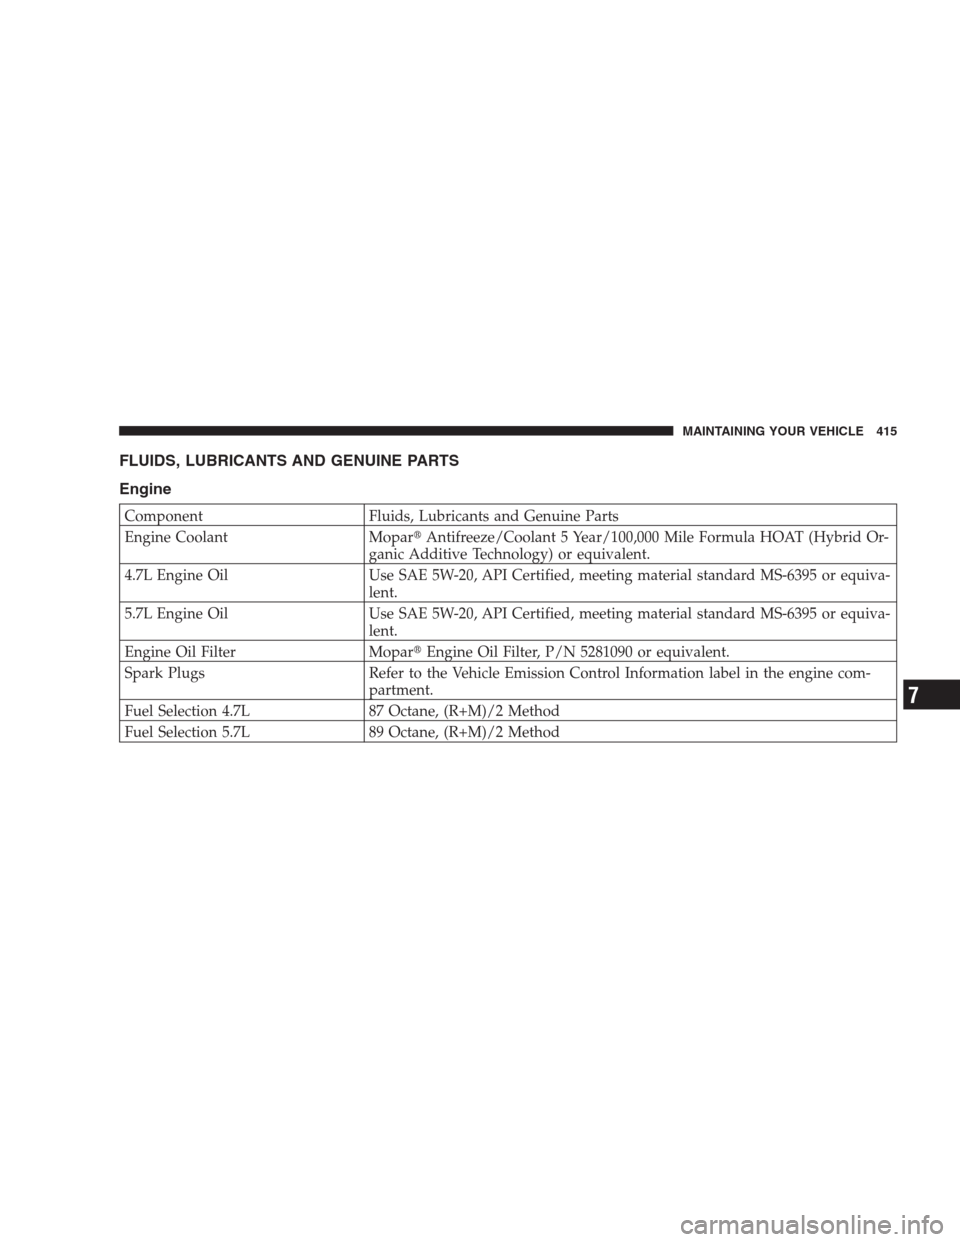 CHRYSLER ASPEN 2007 2.G Owners Manual FLUIDS, LUBRICANTS AND GENUINE PARTS
Engine
Component Fluids, Lubricants and Genuine Parts
Engine Coolant MoparAntifreeze/Coolant 5 Year/100,000 Mile Formula HOAT (Hybrid Or-
ganic Additive Technolog